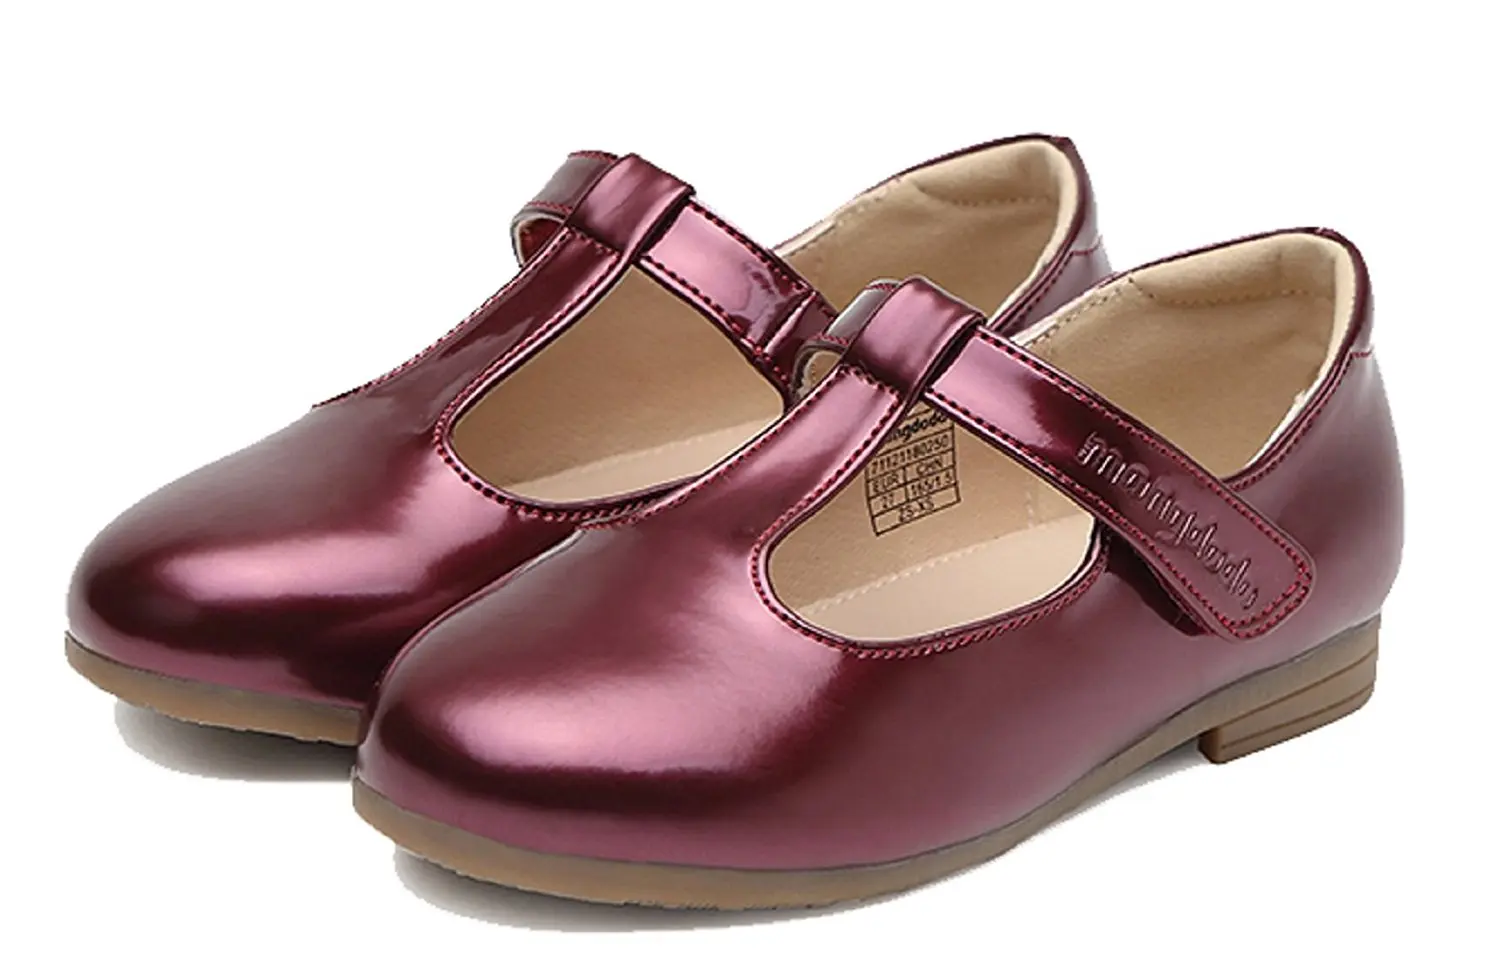 girls school shoes size 9